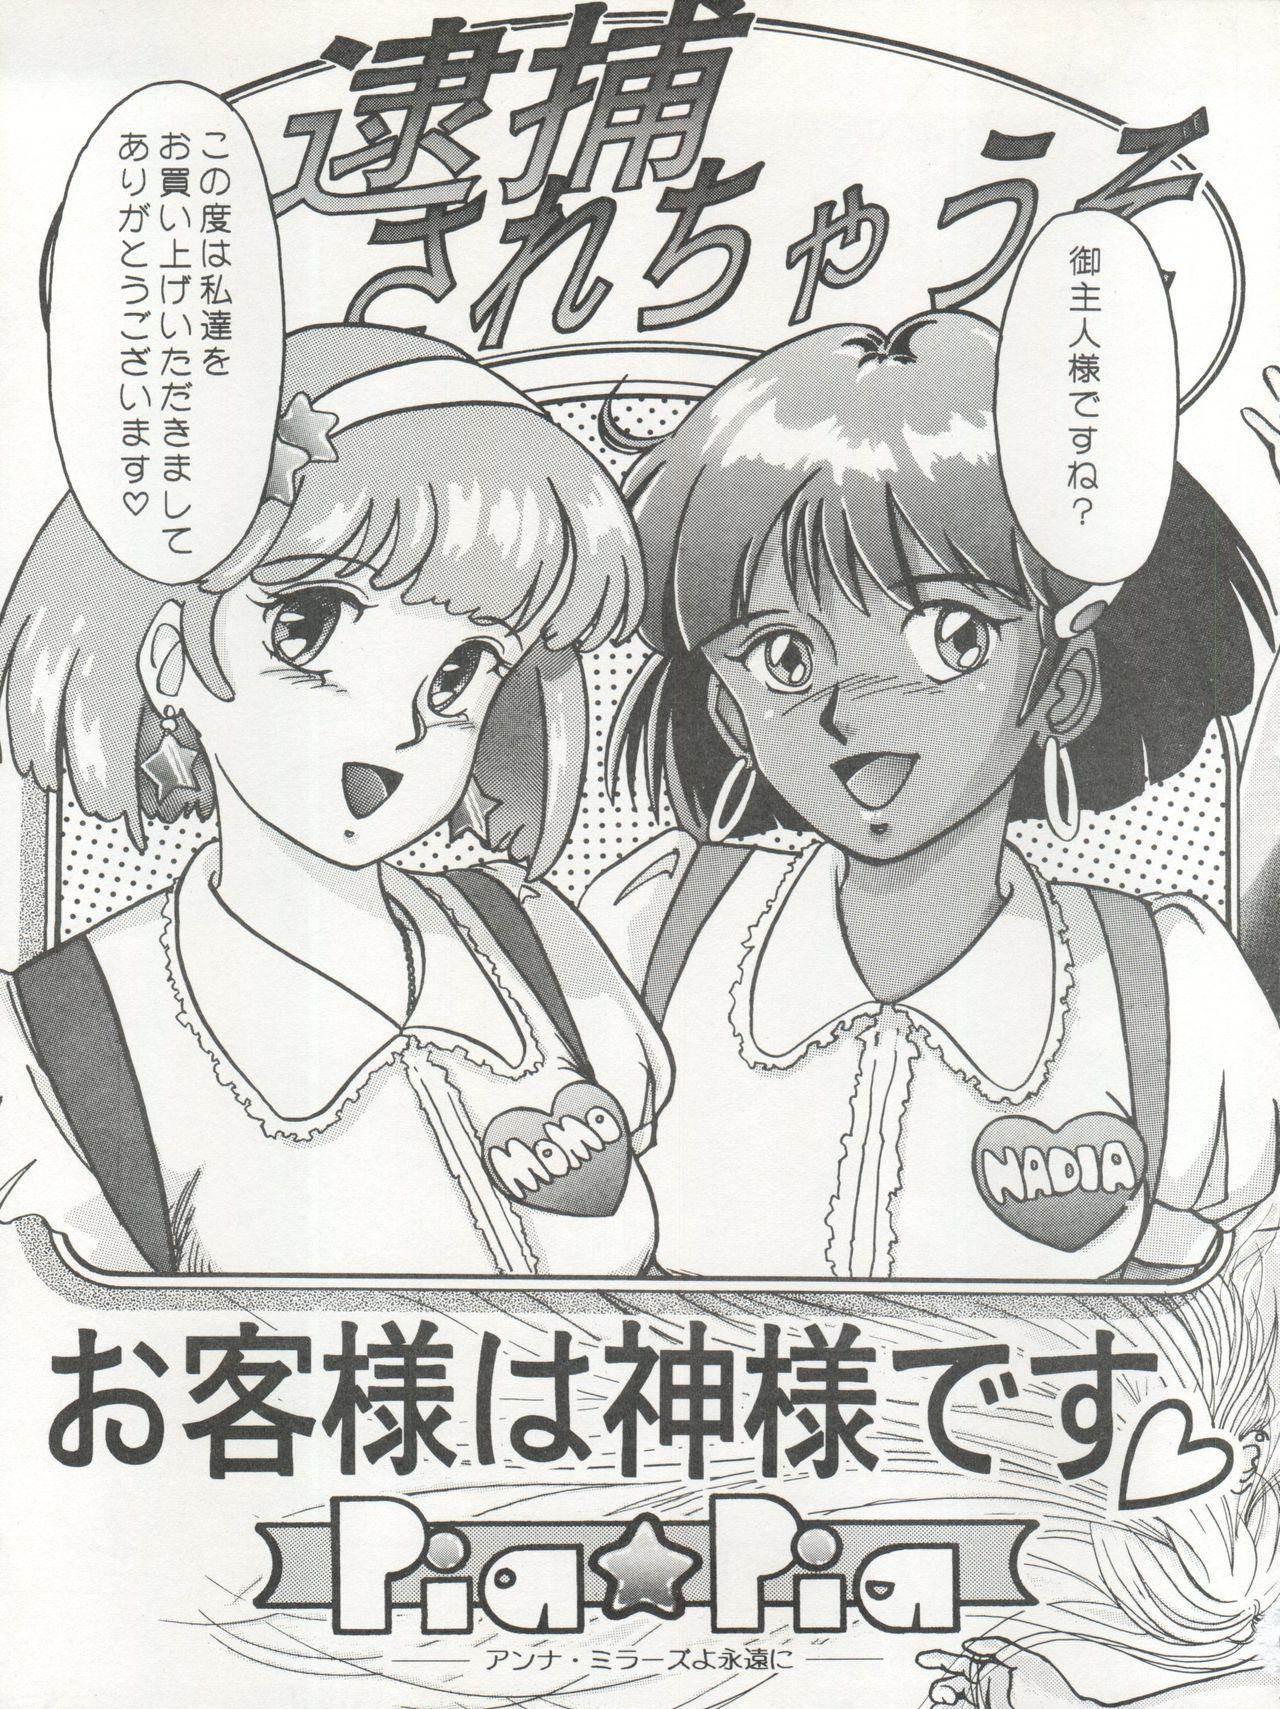 African 逮捕されちゃうぞ - Fushigi no umi no nadia Youre under arrest Minky momo 3x3 eyes Blowing - Page 3